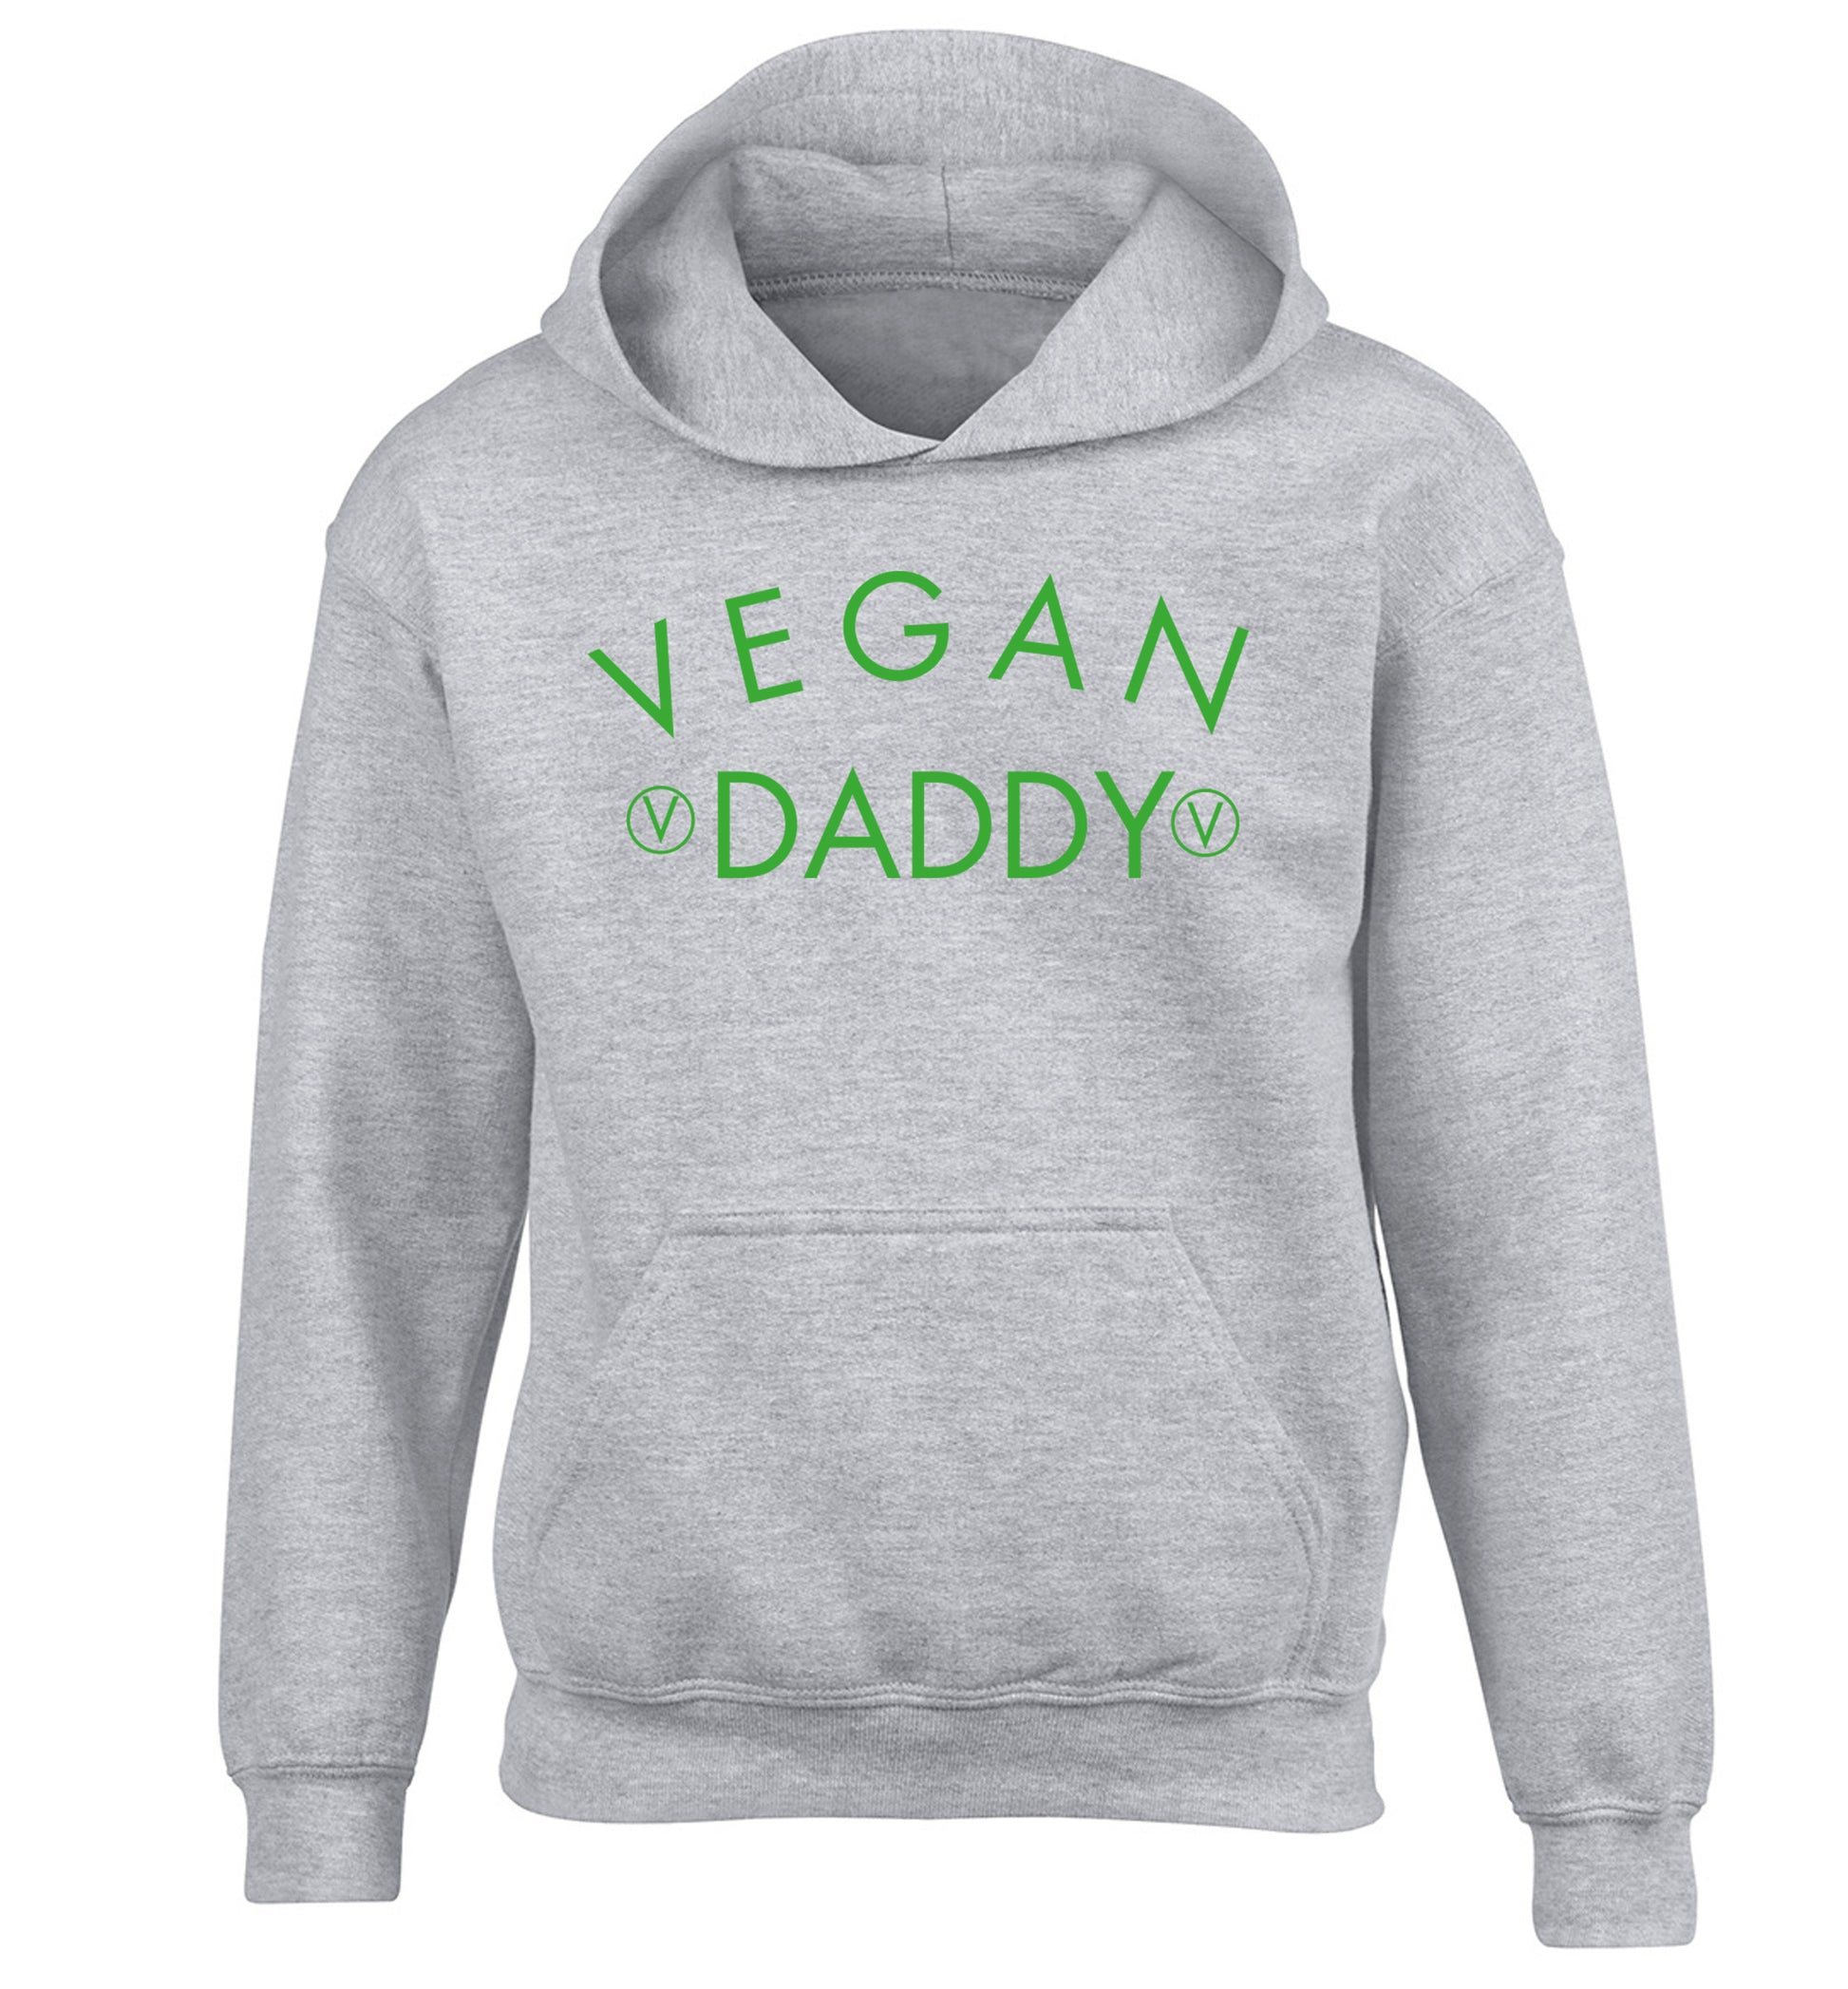 Vegan daddy children's grey hoodie 12-14 Years